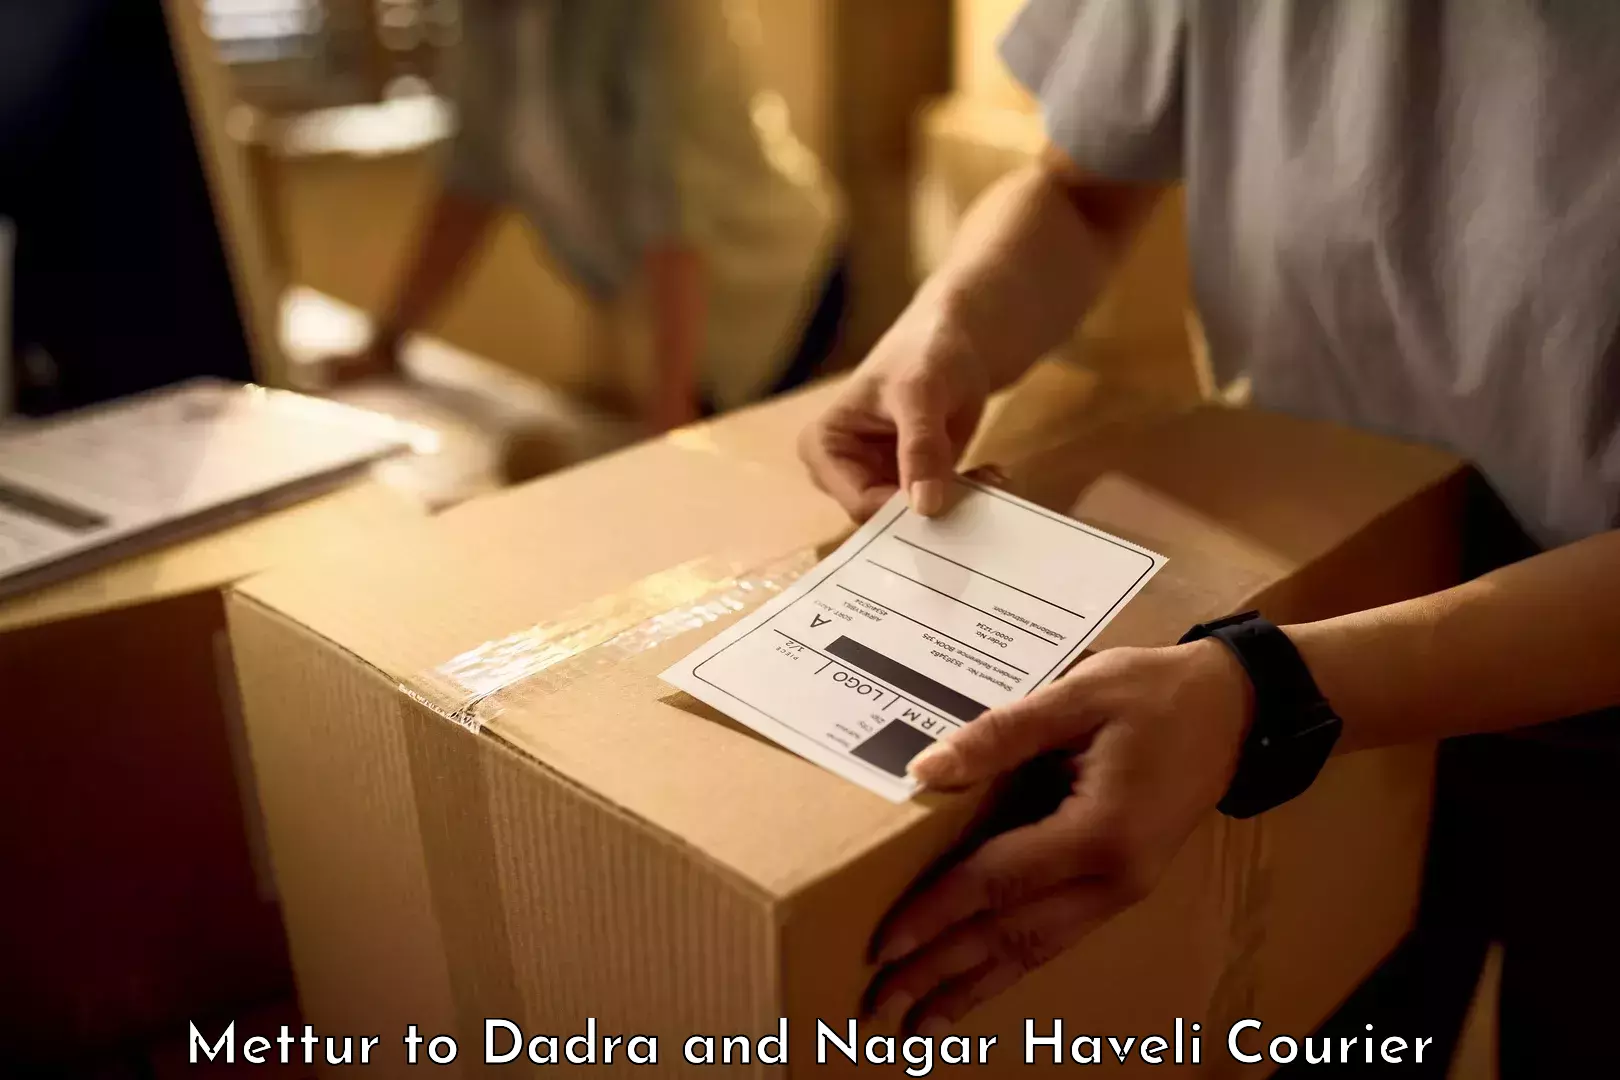 Baggage transport professionals Mettur to Dadra and Nagar Haveli